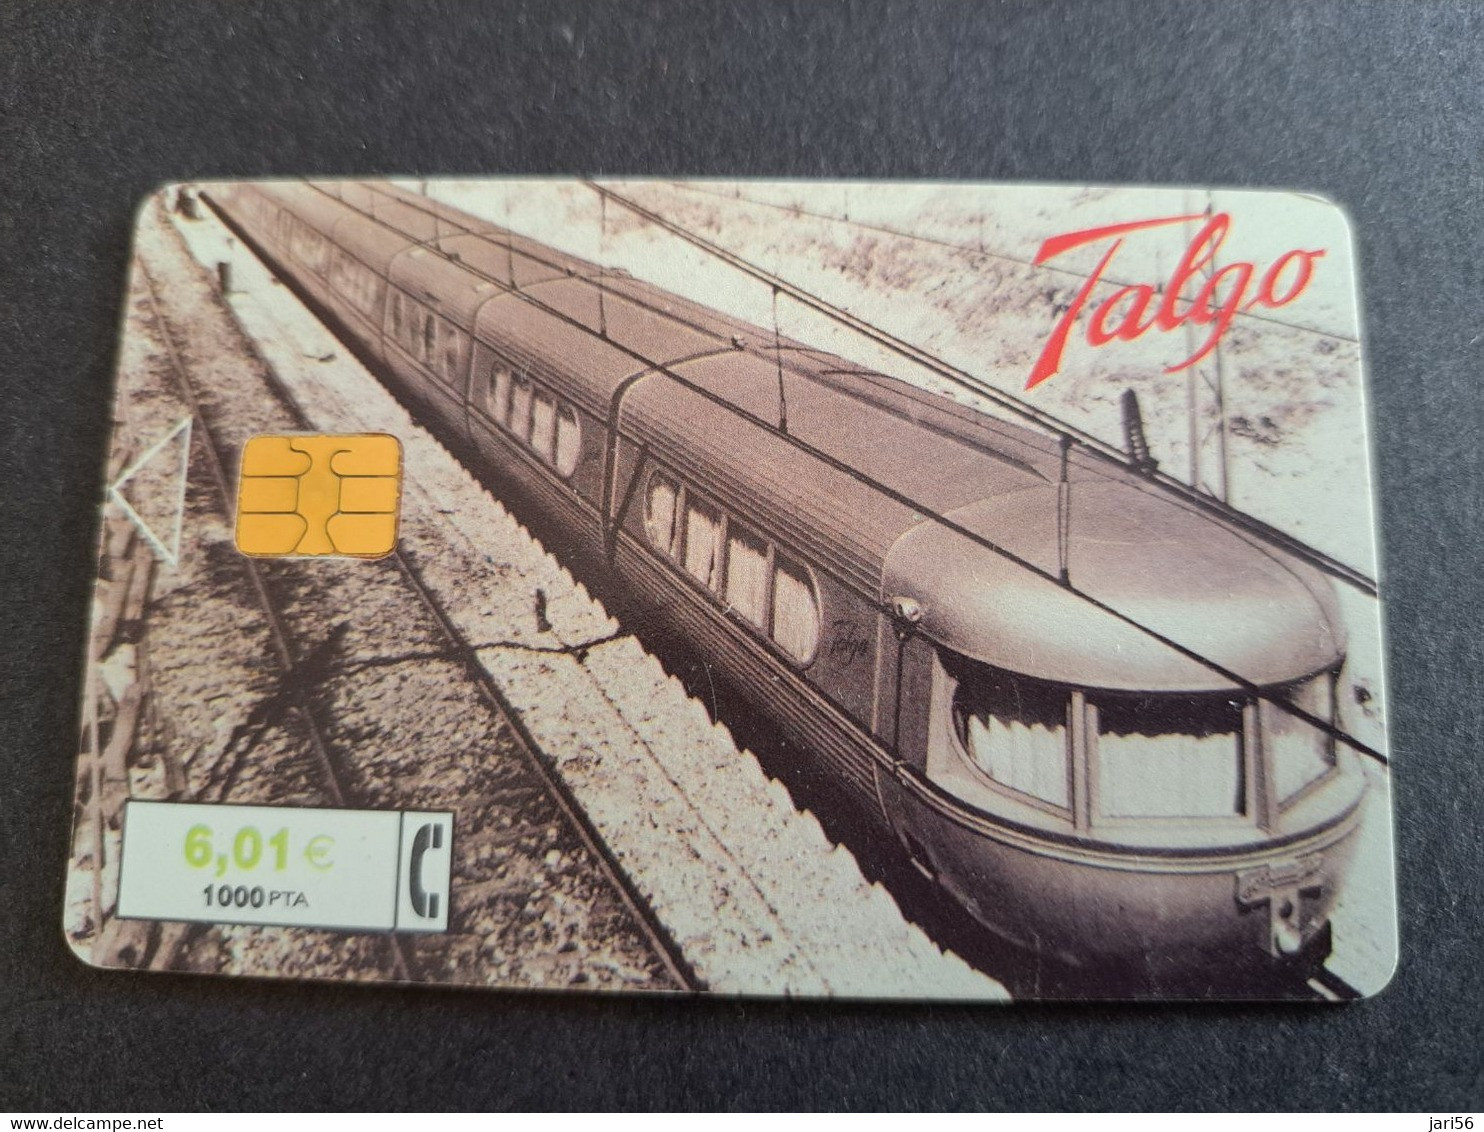 SPAIN/ ESPANA   2000pta TRAIN   TALGO  /  Nice  Fine Used  CHIP CARD  **10359** - Private Issues